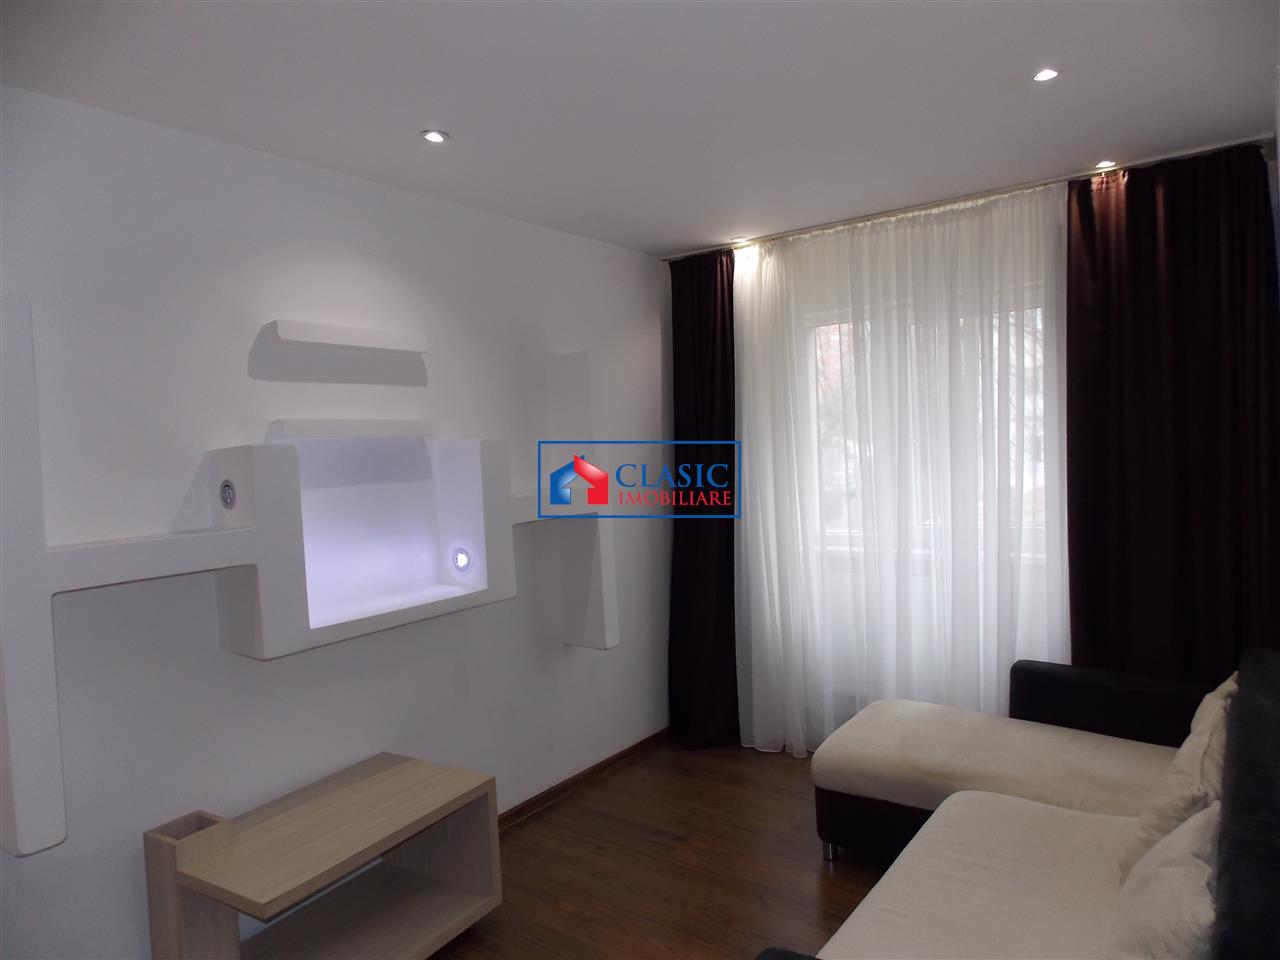 Inchiriere apartament 4 camere modern in Manastur  BIG, Cluj Napoca